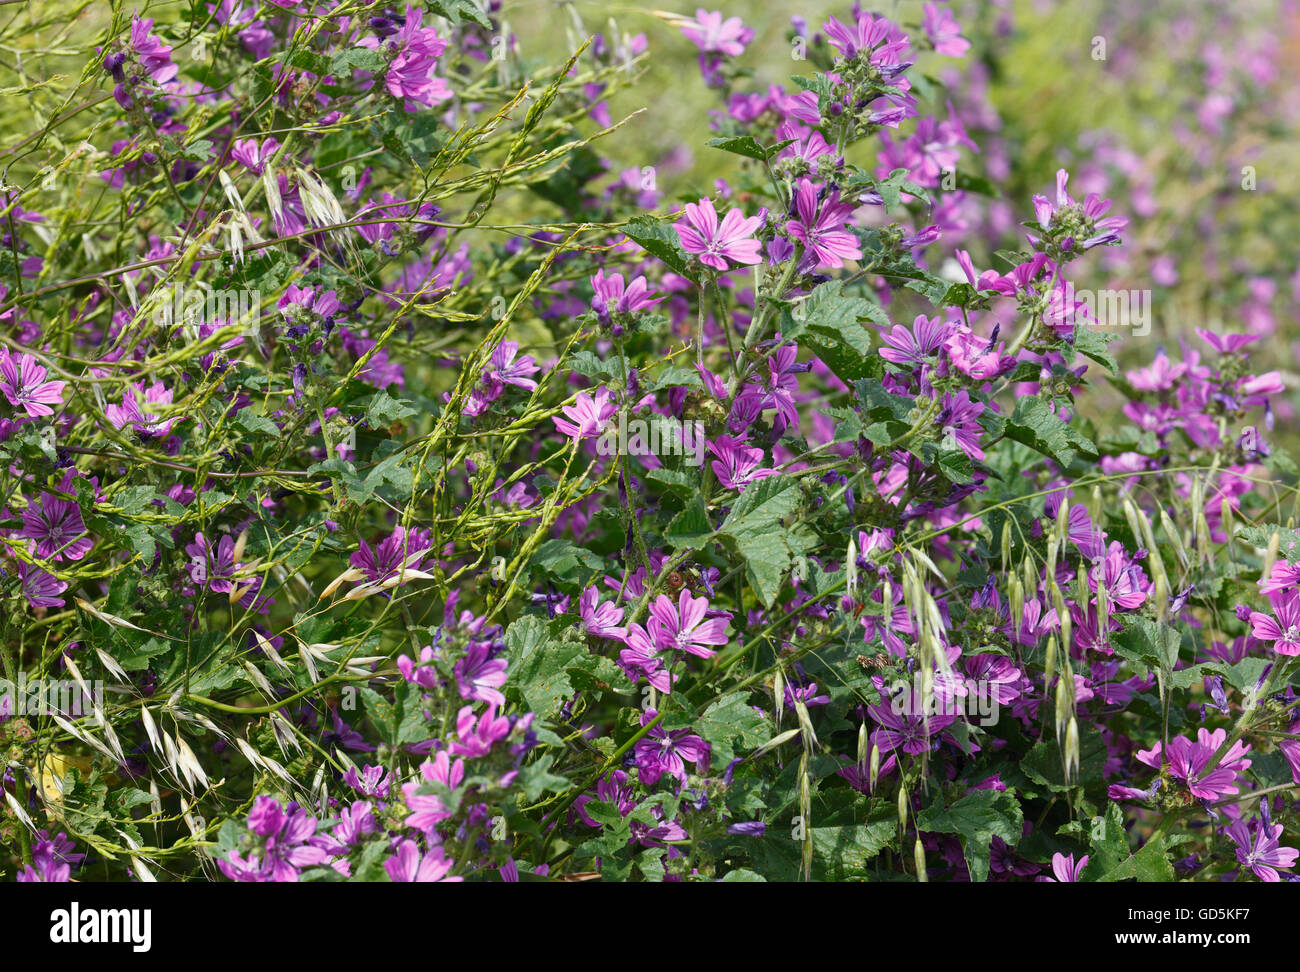 Malva sylvestris, Mallow plant in flower. Stock Photo